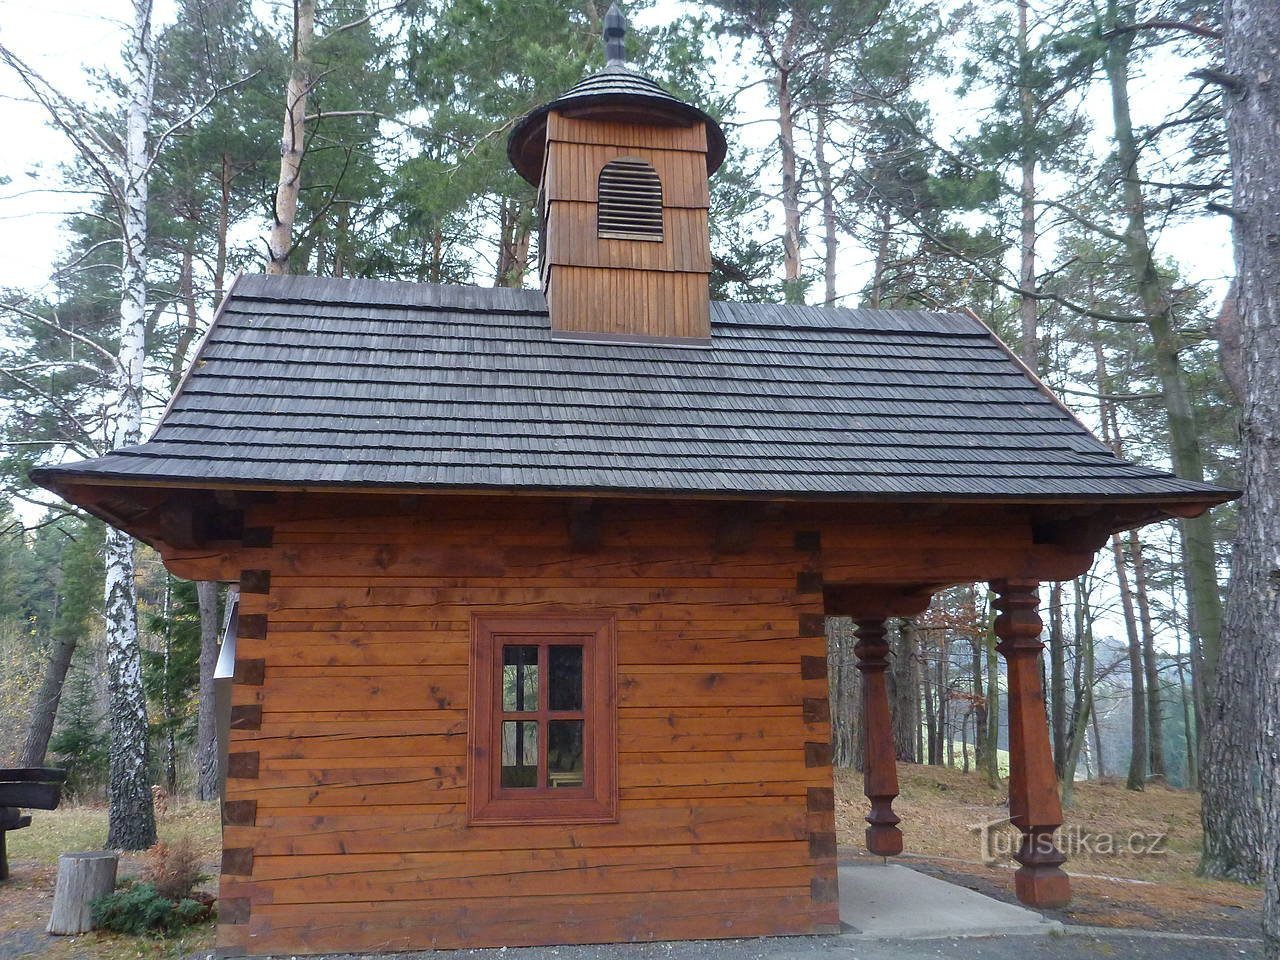 Die Holzkapelle St. Hubert über Valašská Senicá.